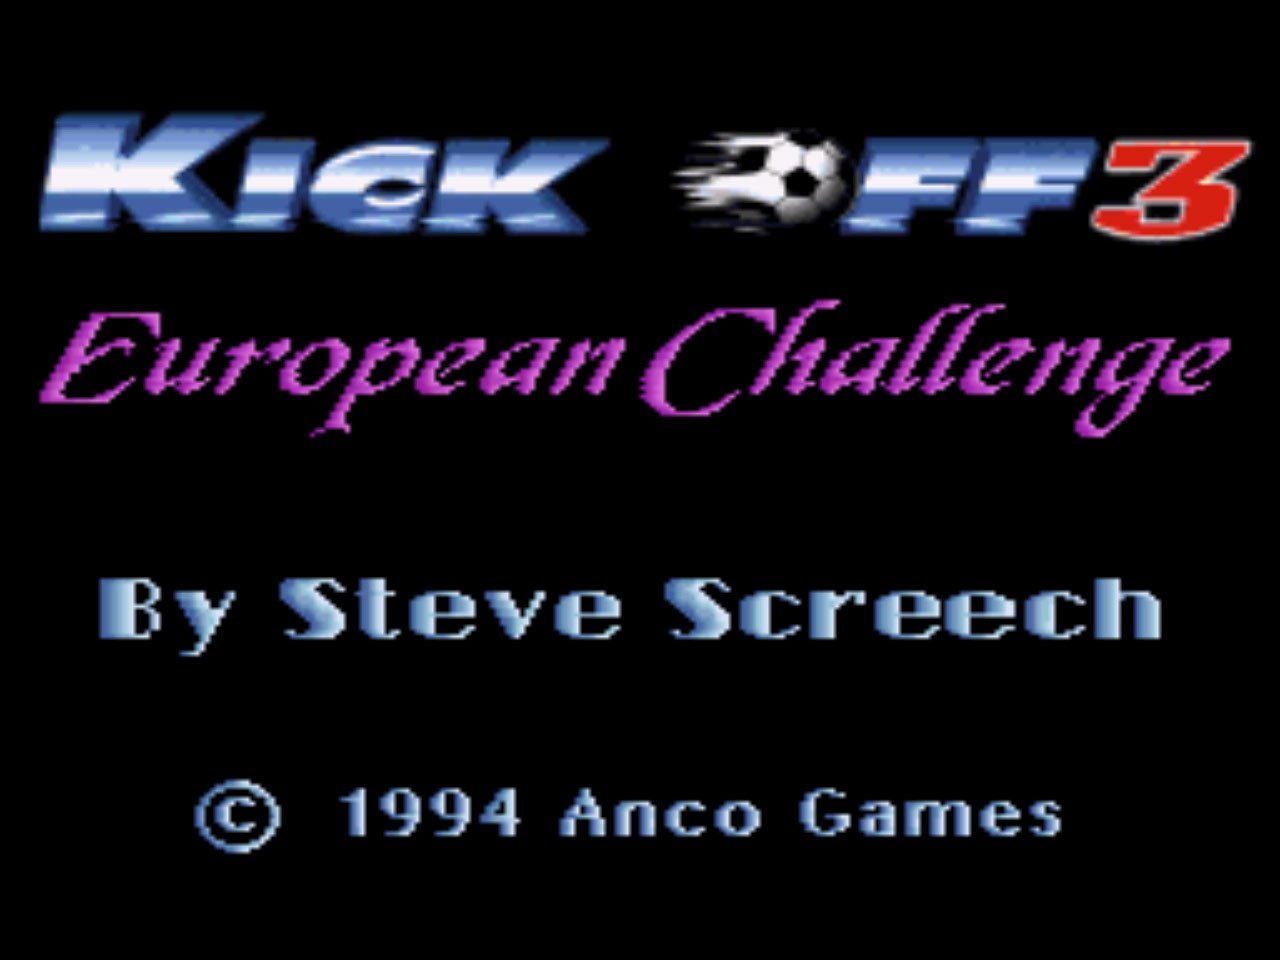 Pantallazo de Kick Off 3: European Challenge para Super Nintendo